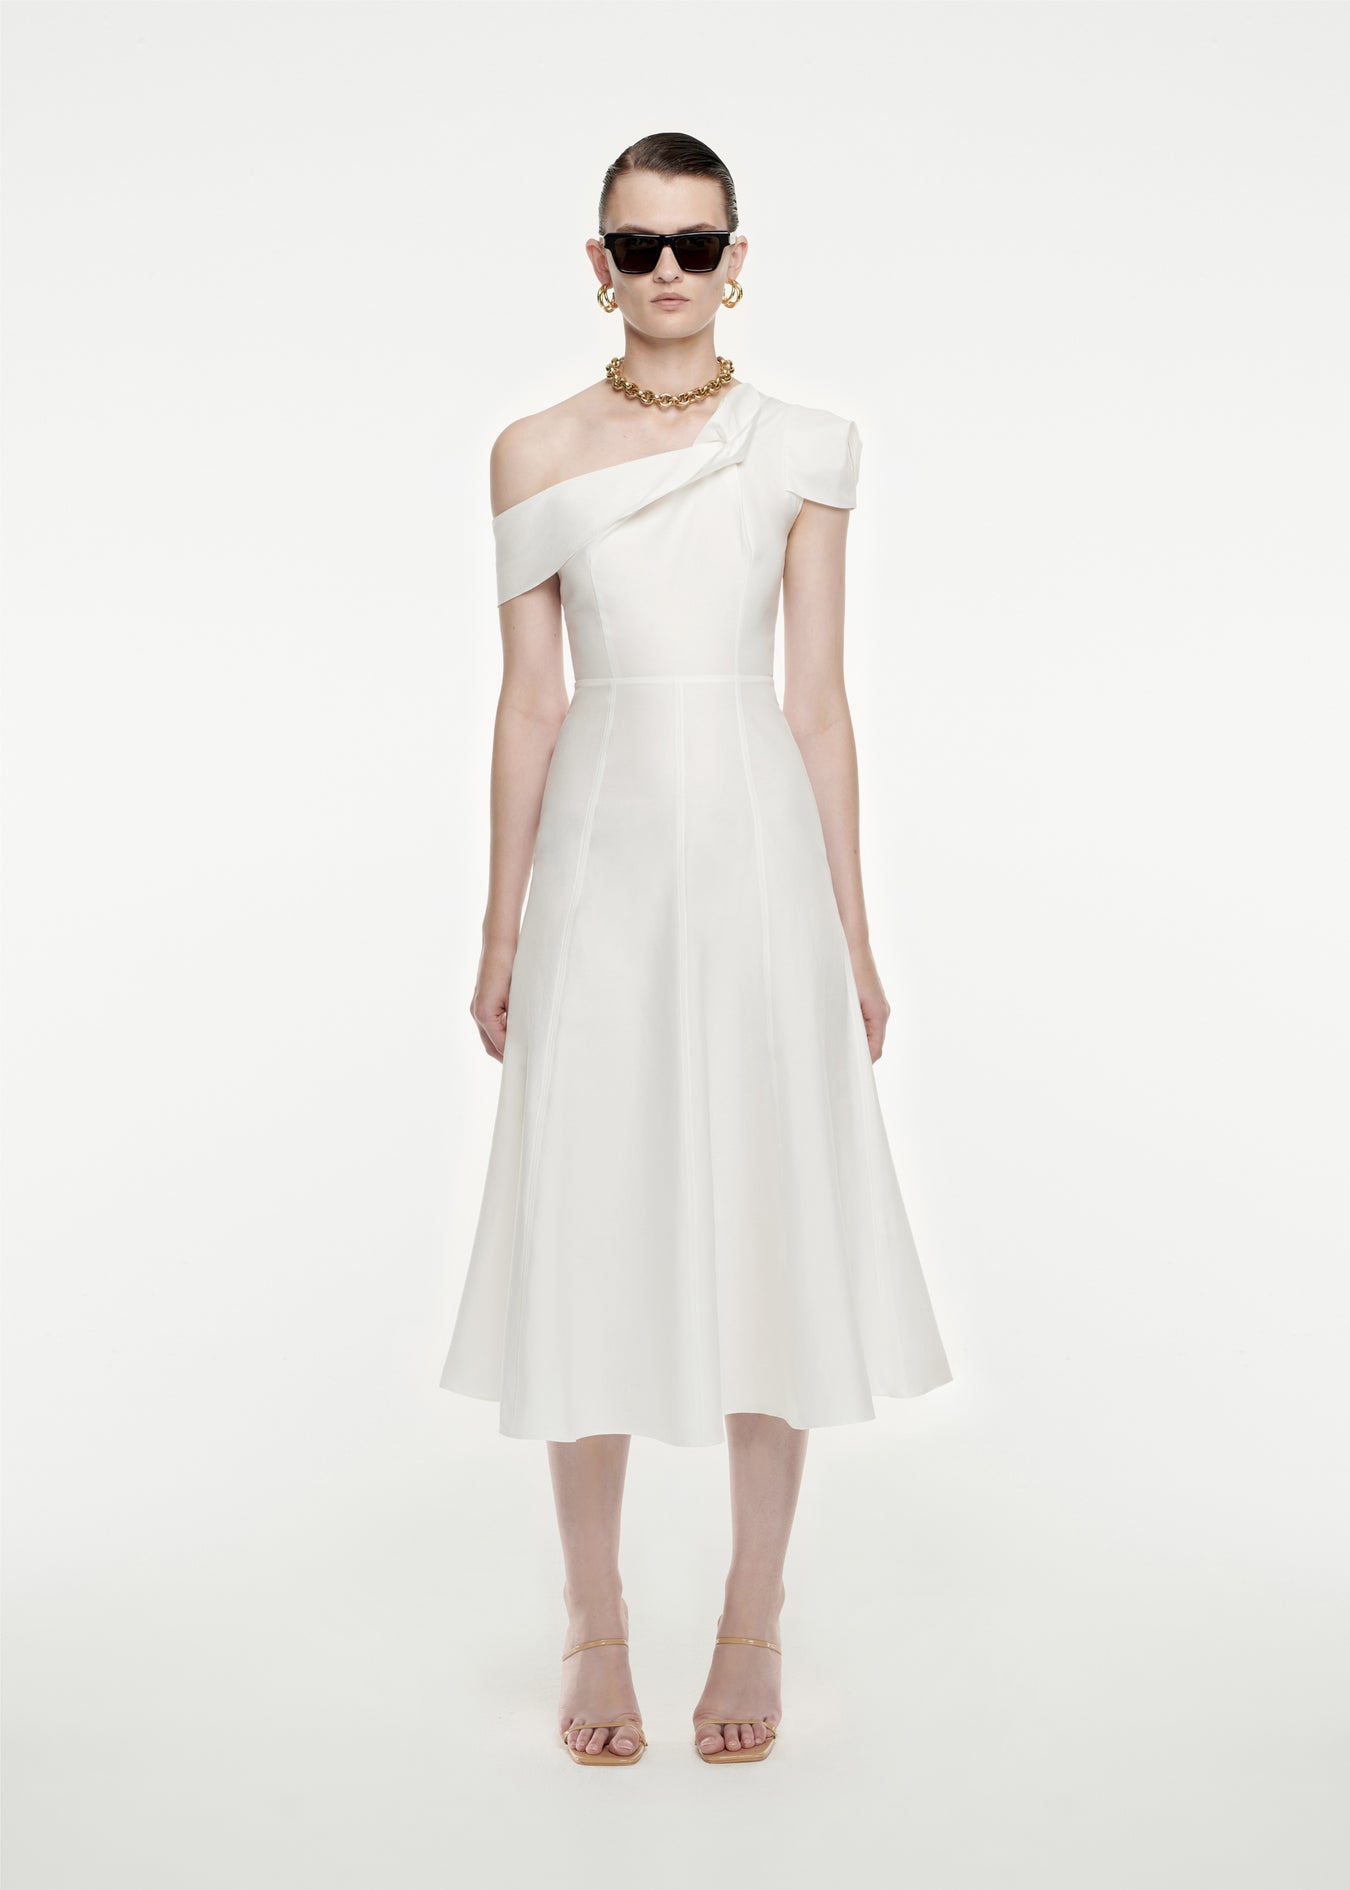 Woman wearing the Asymmetric Cotton Poplin Midi Dress in White